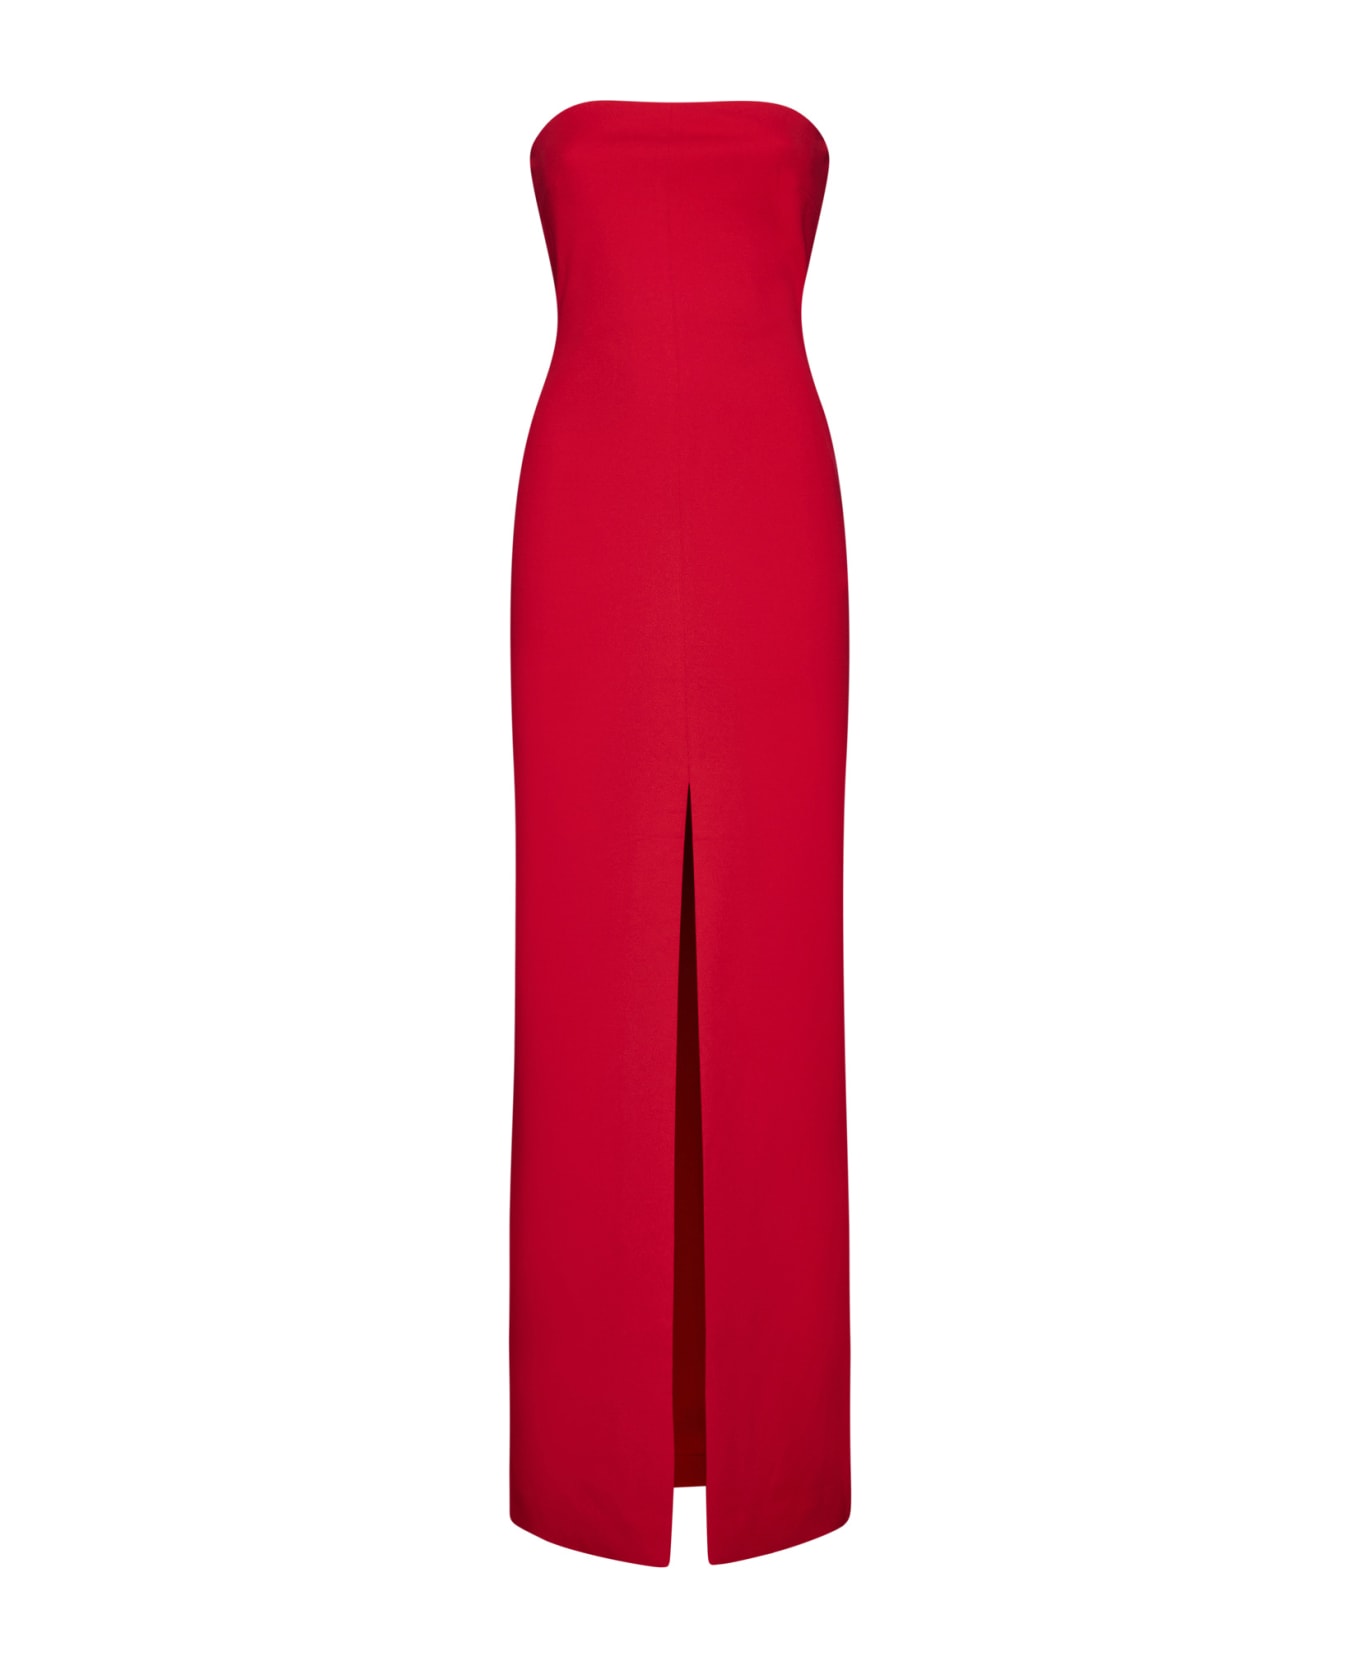 Solace London Dress - Red ジャンプスーツ